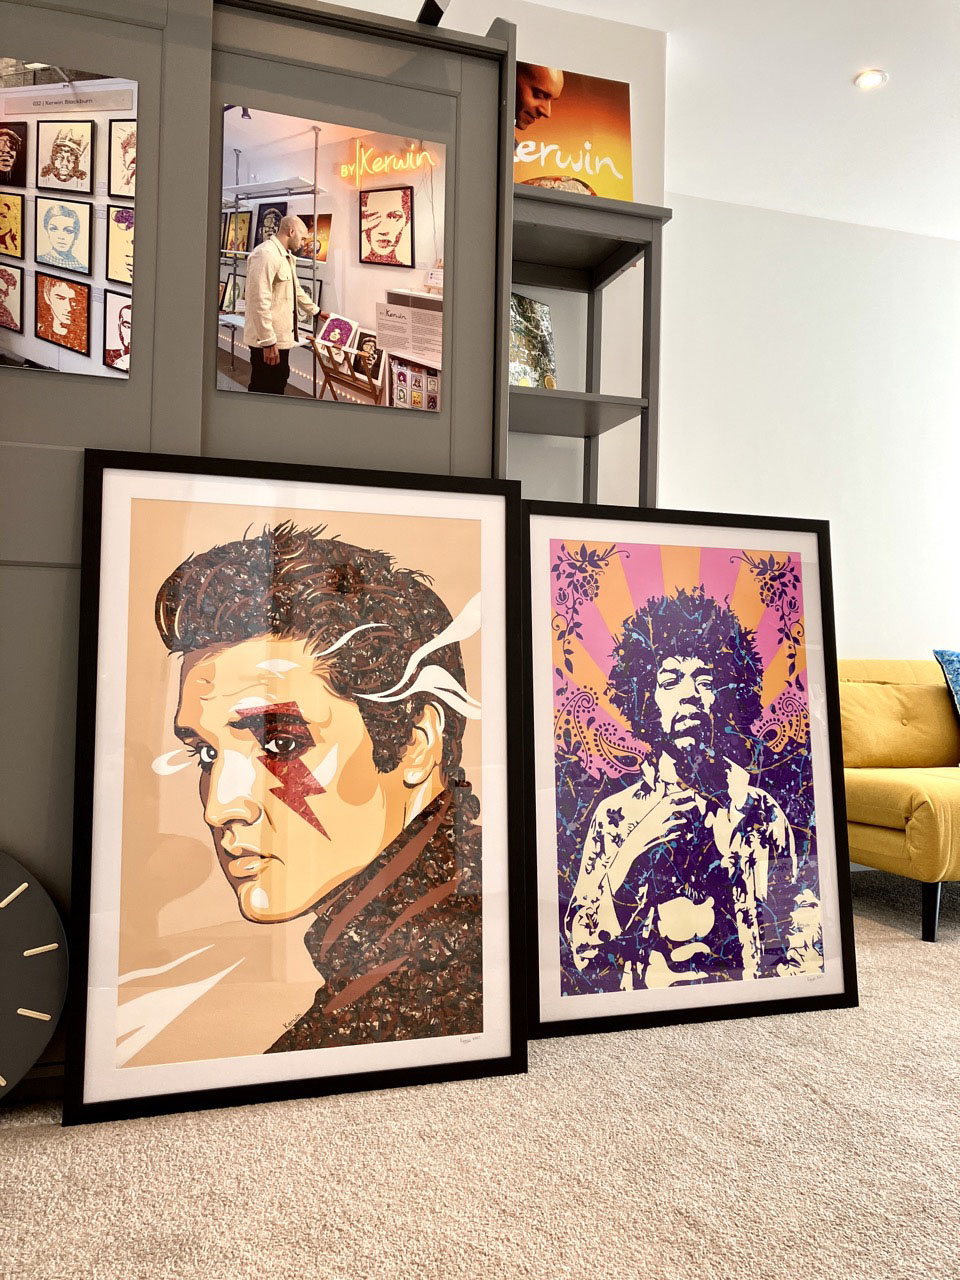 Elvis Presley and Jimi Hendrix framed prints By Kerwin